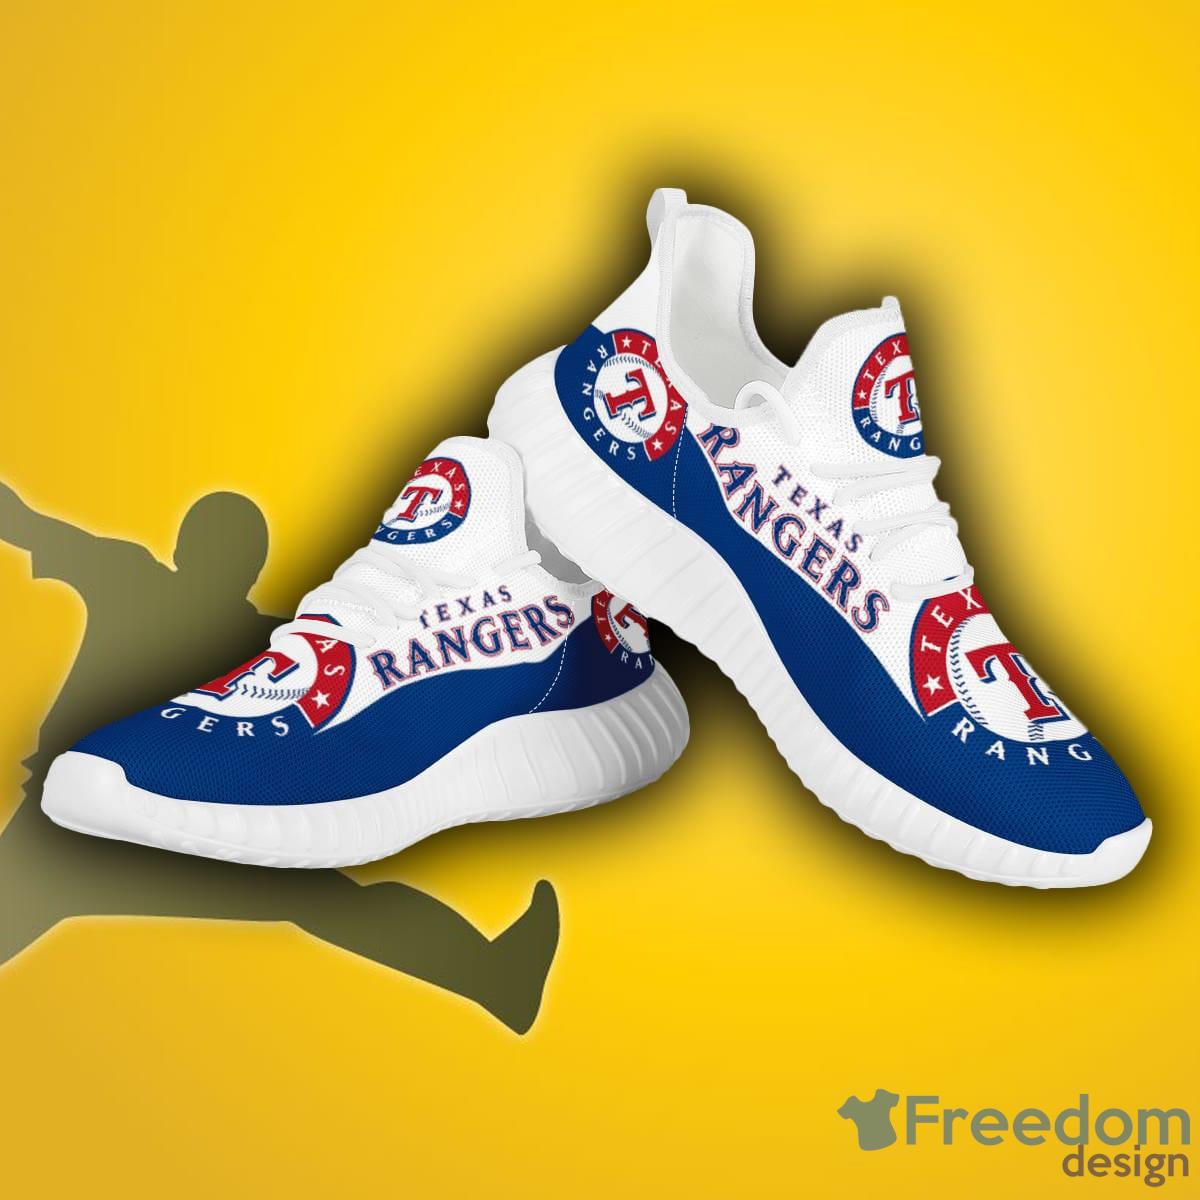 Texas Rangers Special Edition Air Jordan Hightop Shoes - Freedomdesign